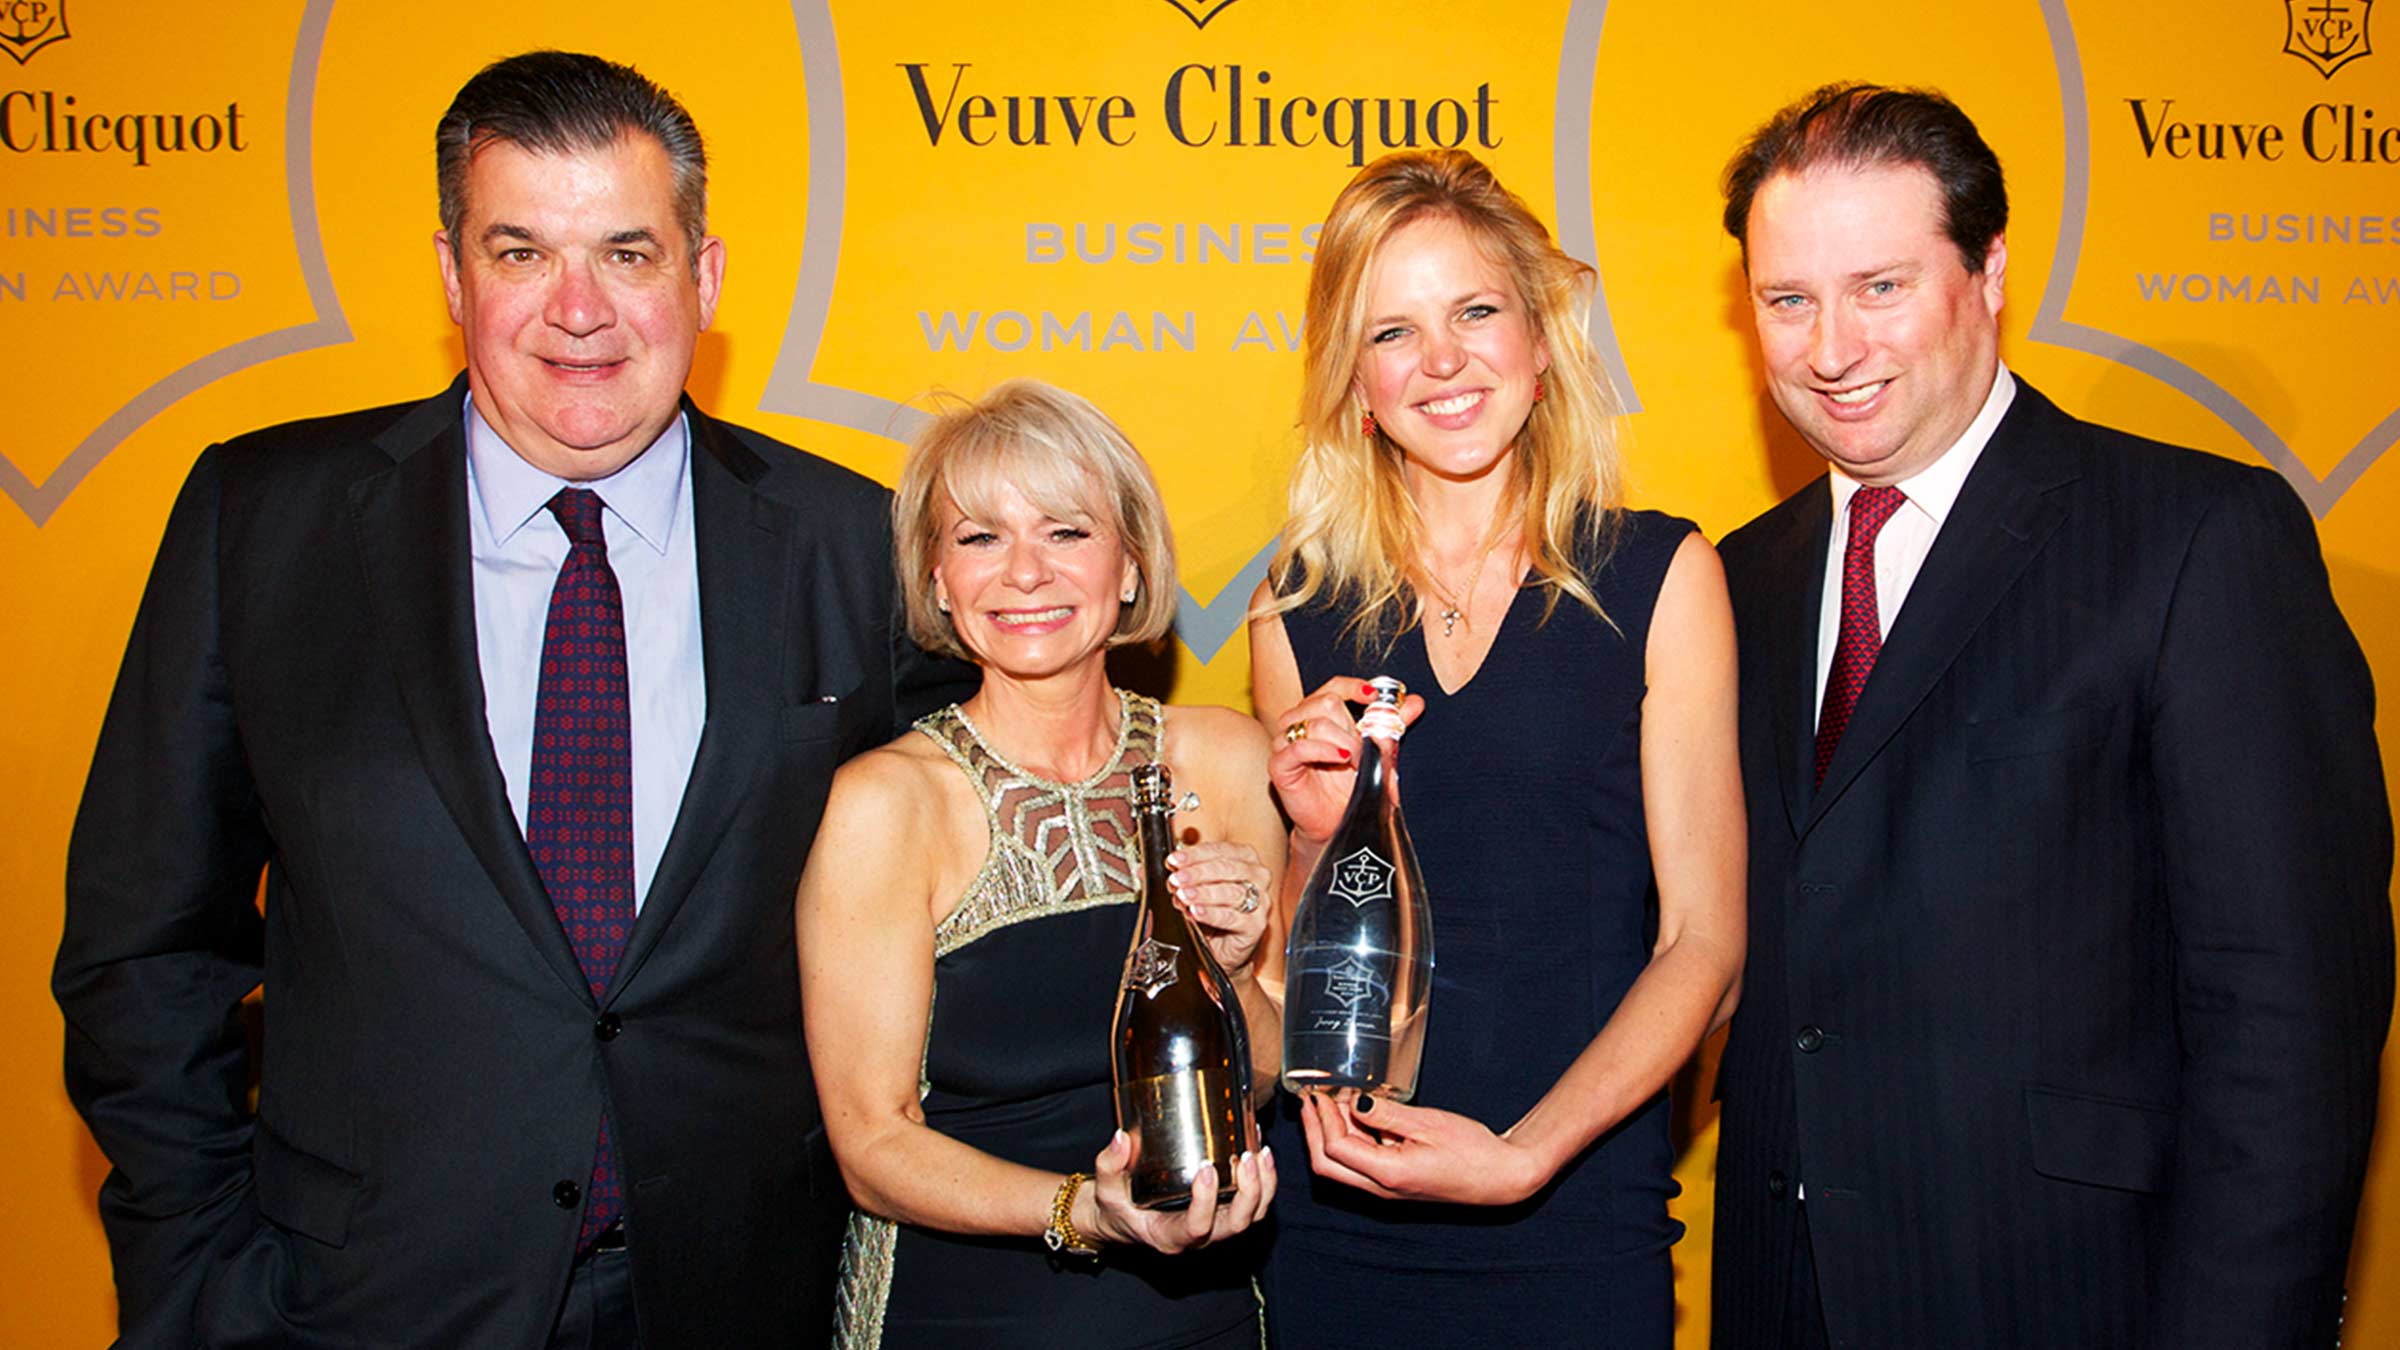 Celebrating 2014’s female achievers with Veuve Clicquot